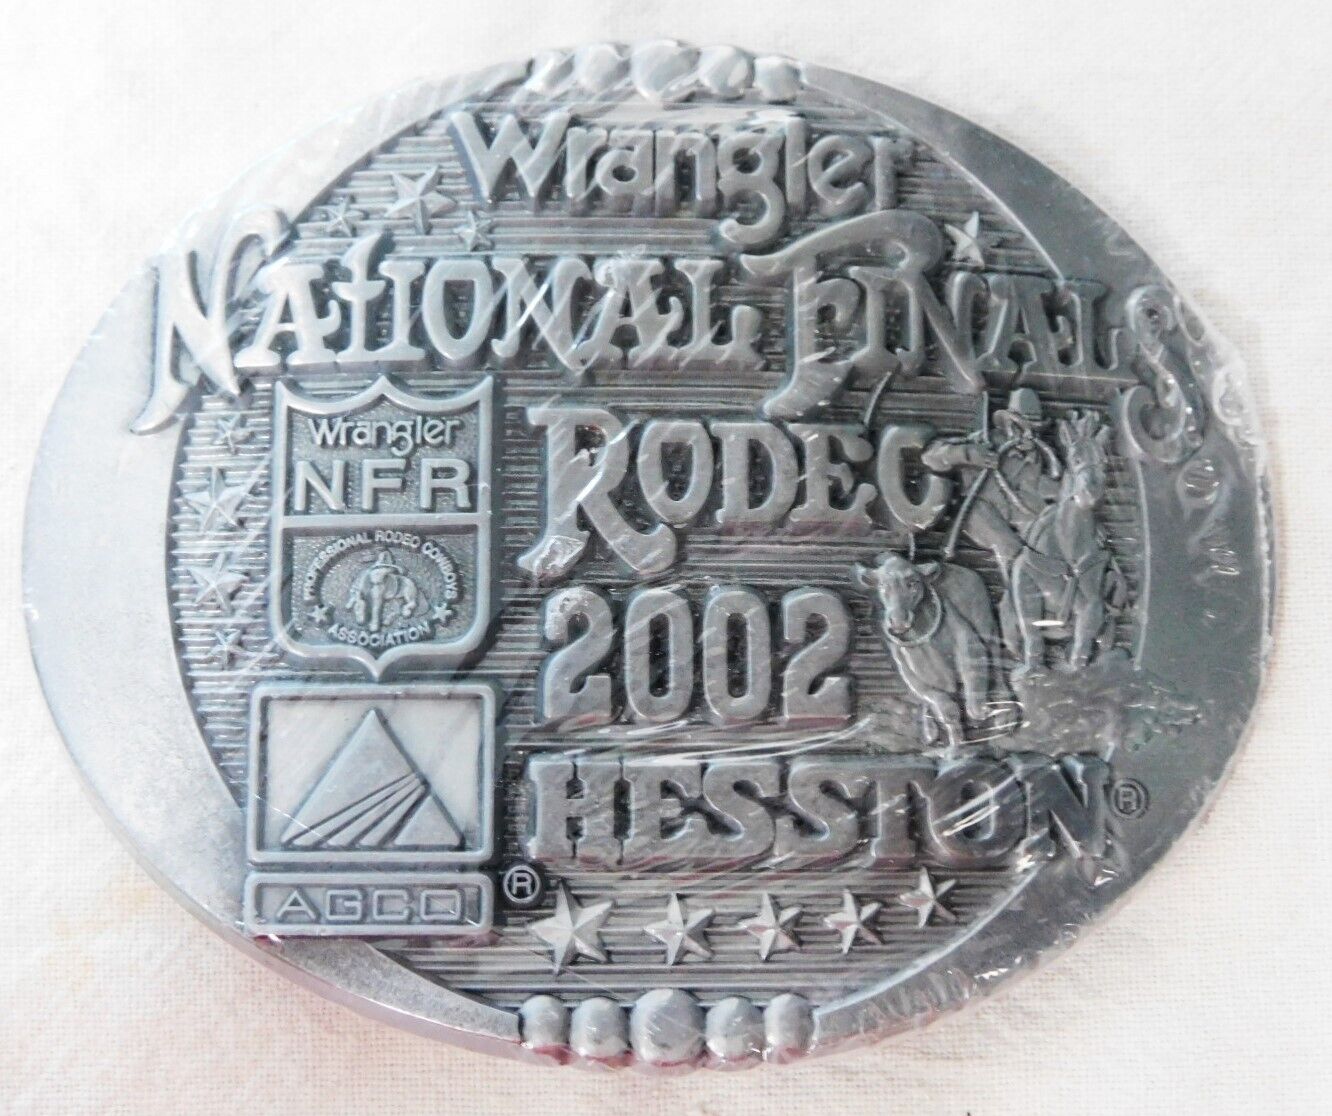 NOS 2002 HESSTON NATIONAL FINALS RODEO BELT BUCKLE - ORIGNINAL WRAPPER